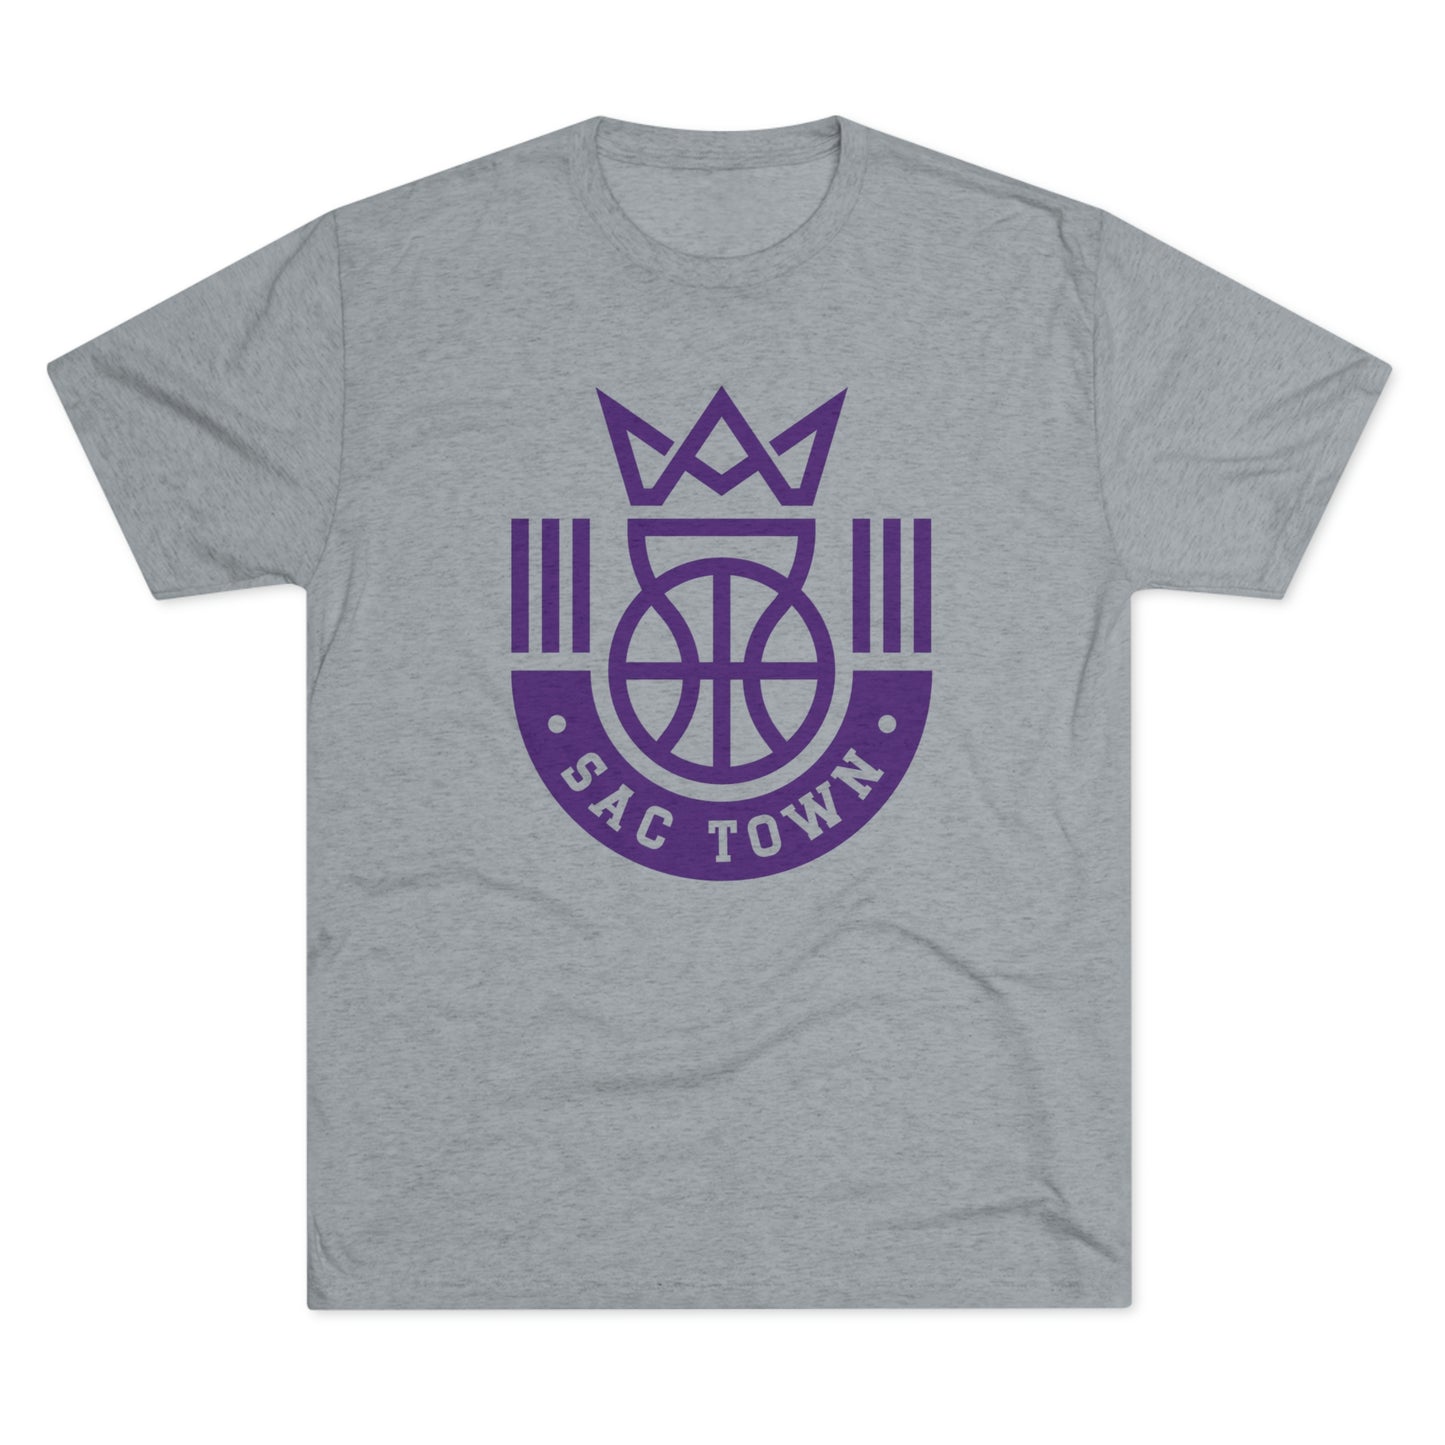 SAC TOWN tshirts - Sacramento Kings clothing and apparel